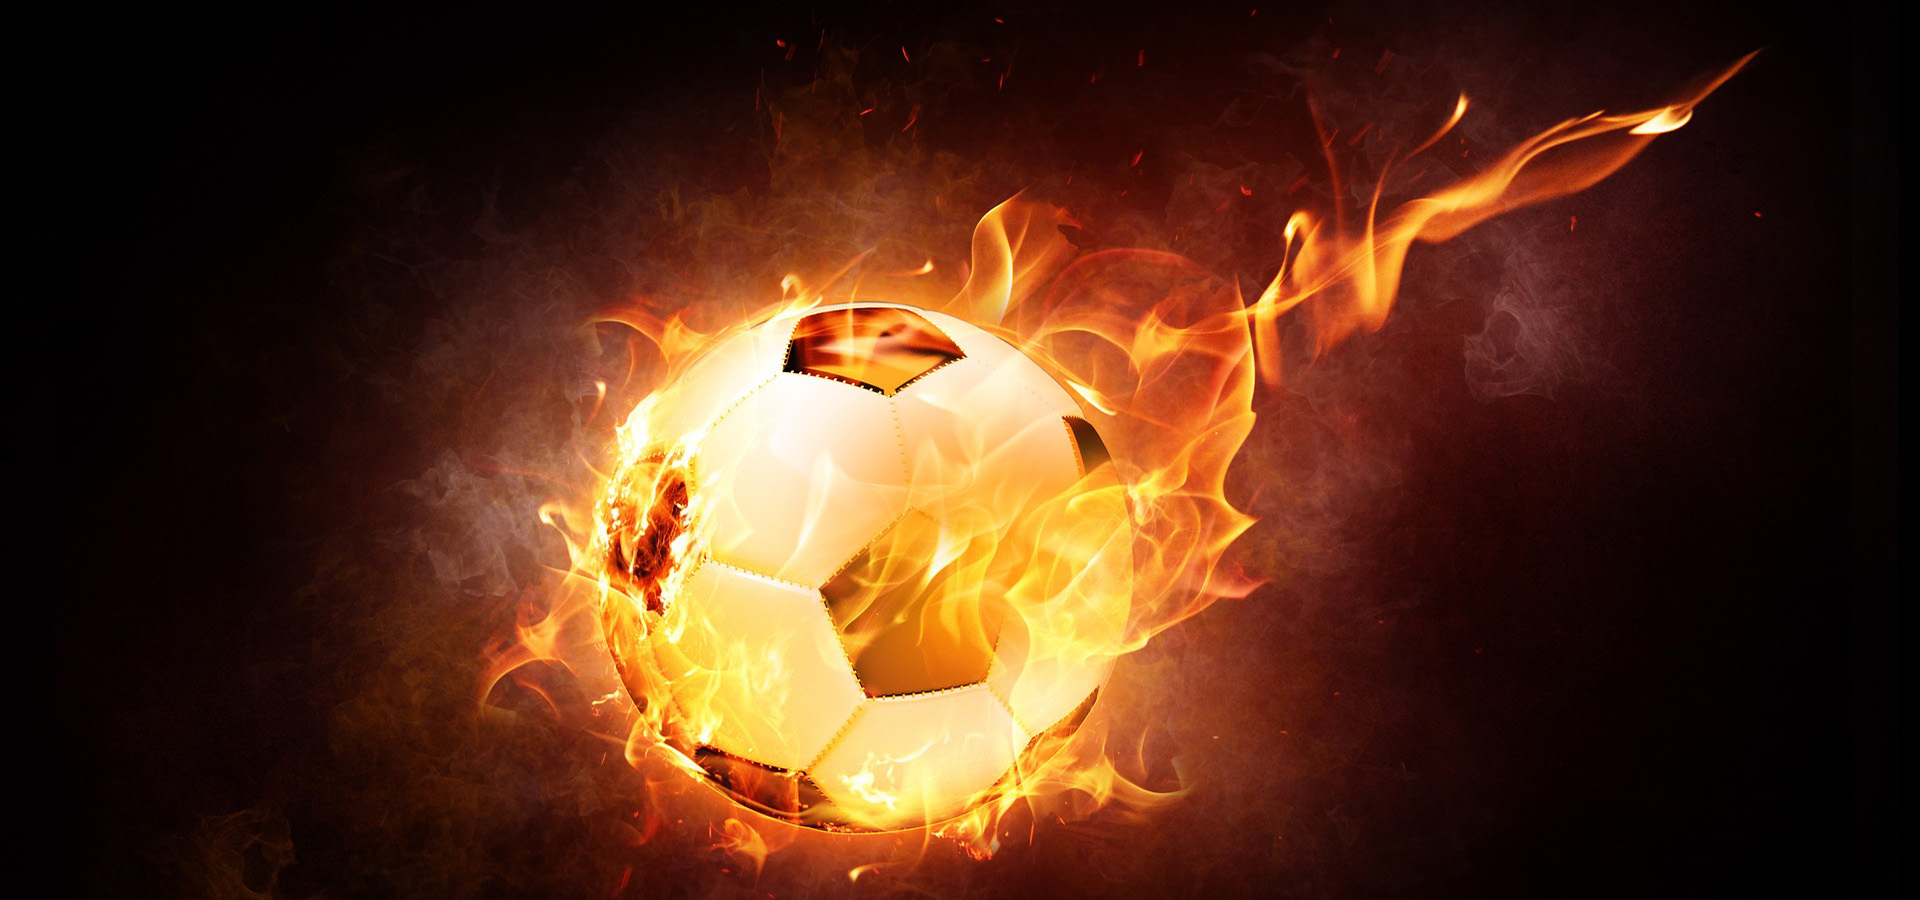 Football On Fire